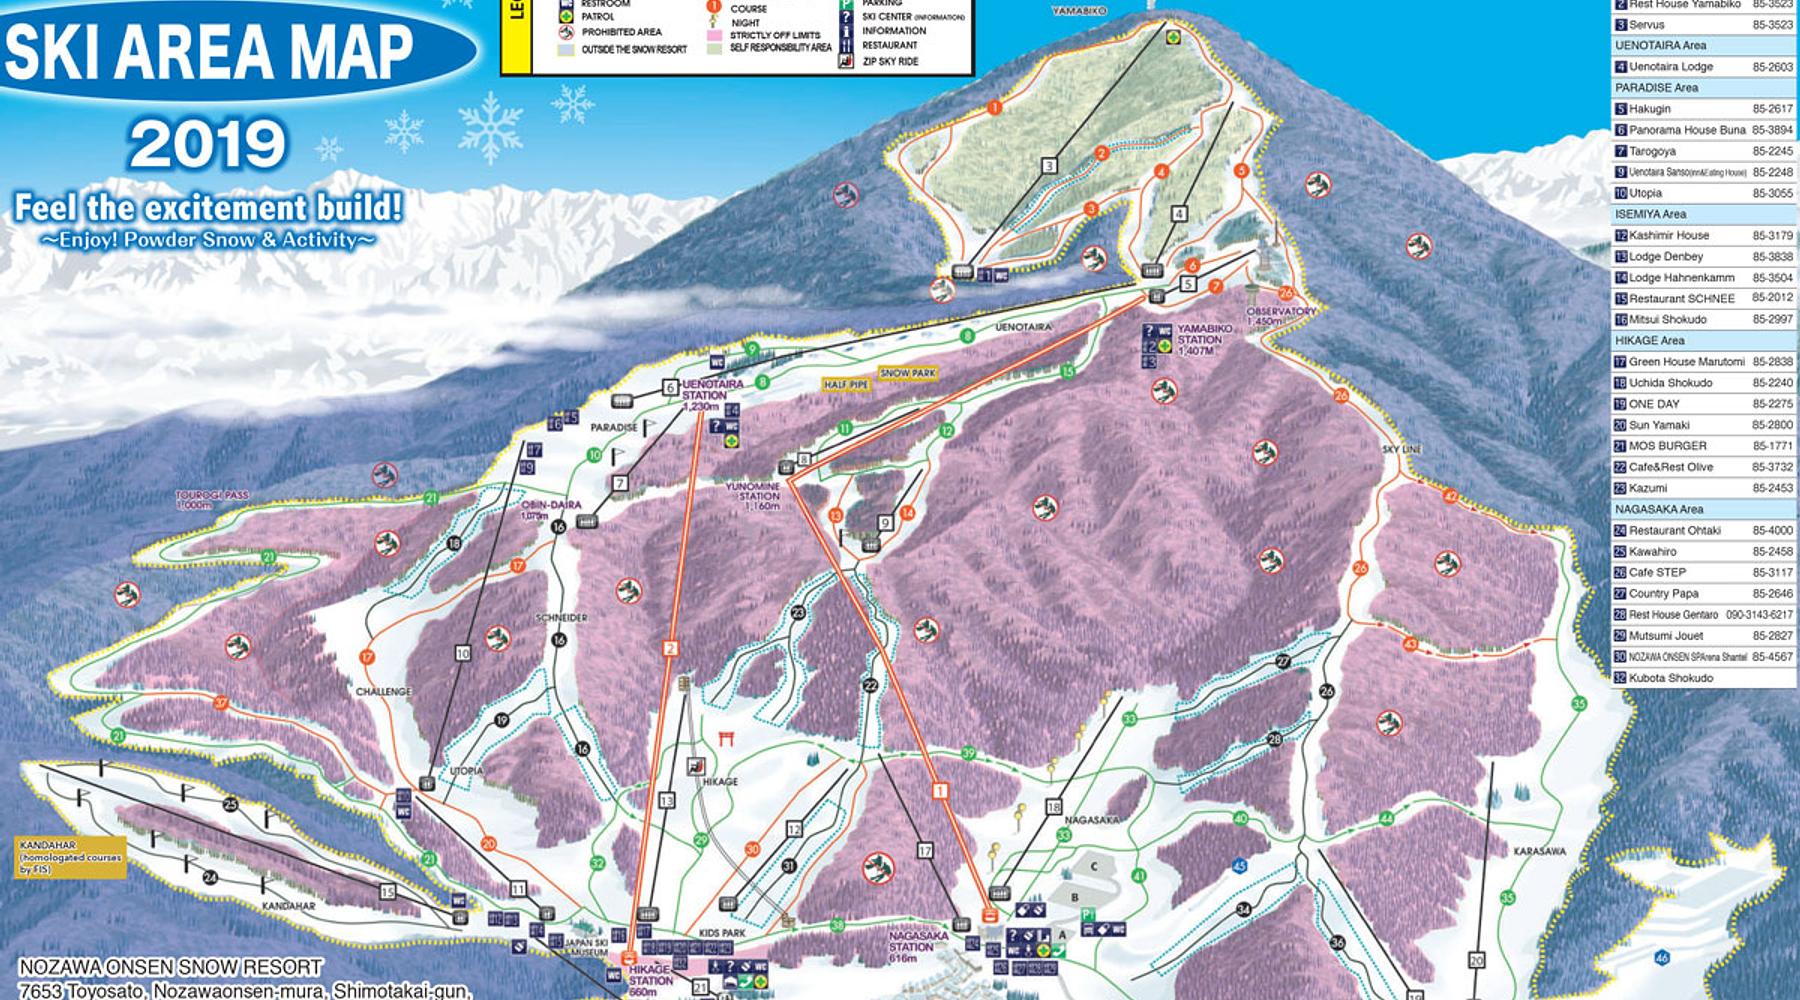 Nozawa onsen's trail map for skiing and snowboarding